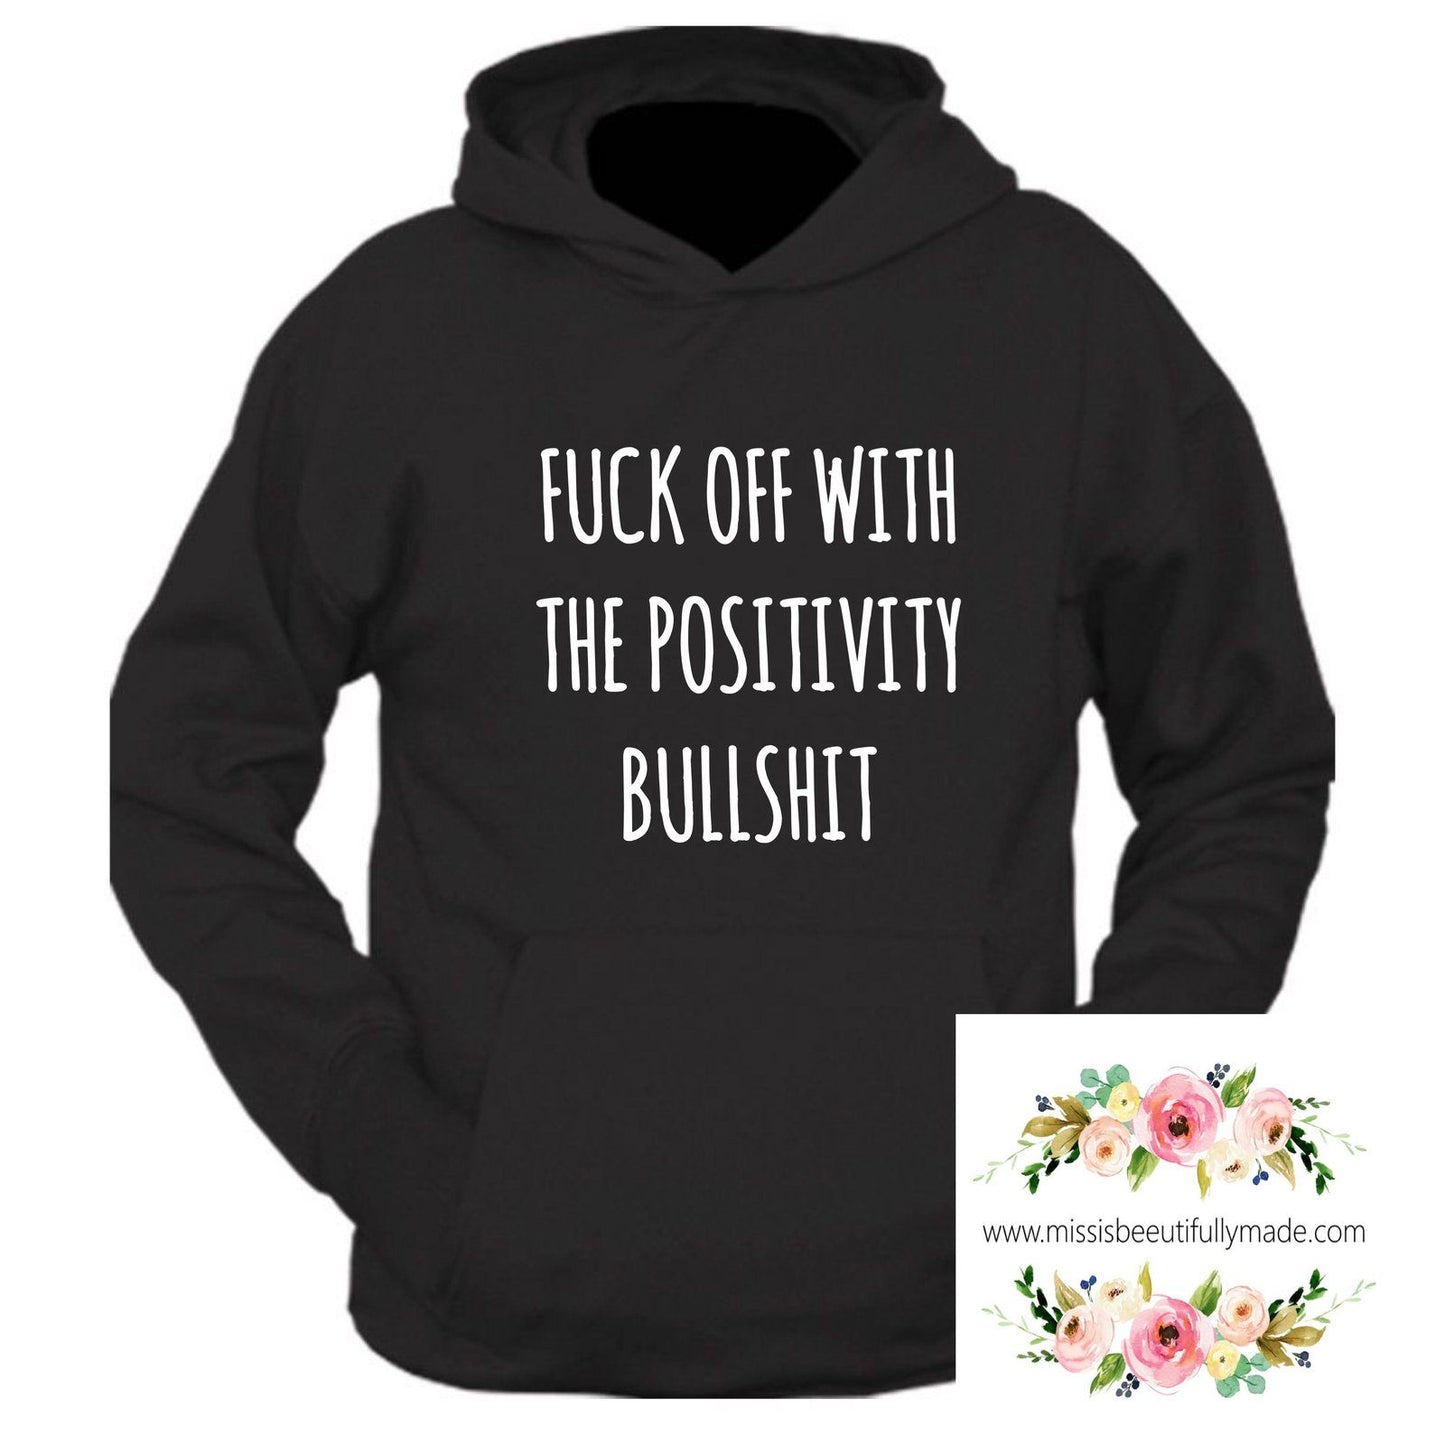 Hoody - Fuck off with your positivity bullshit